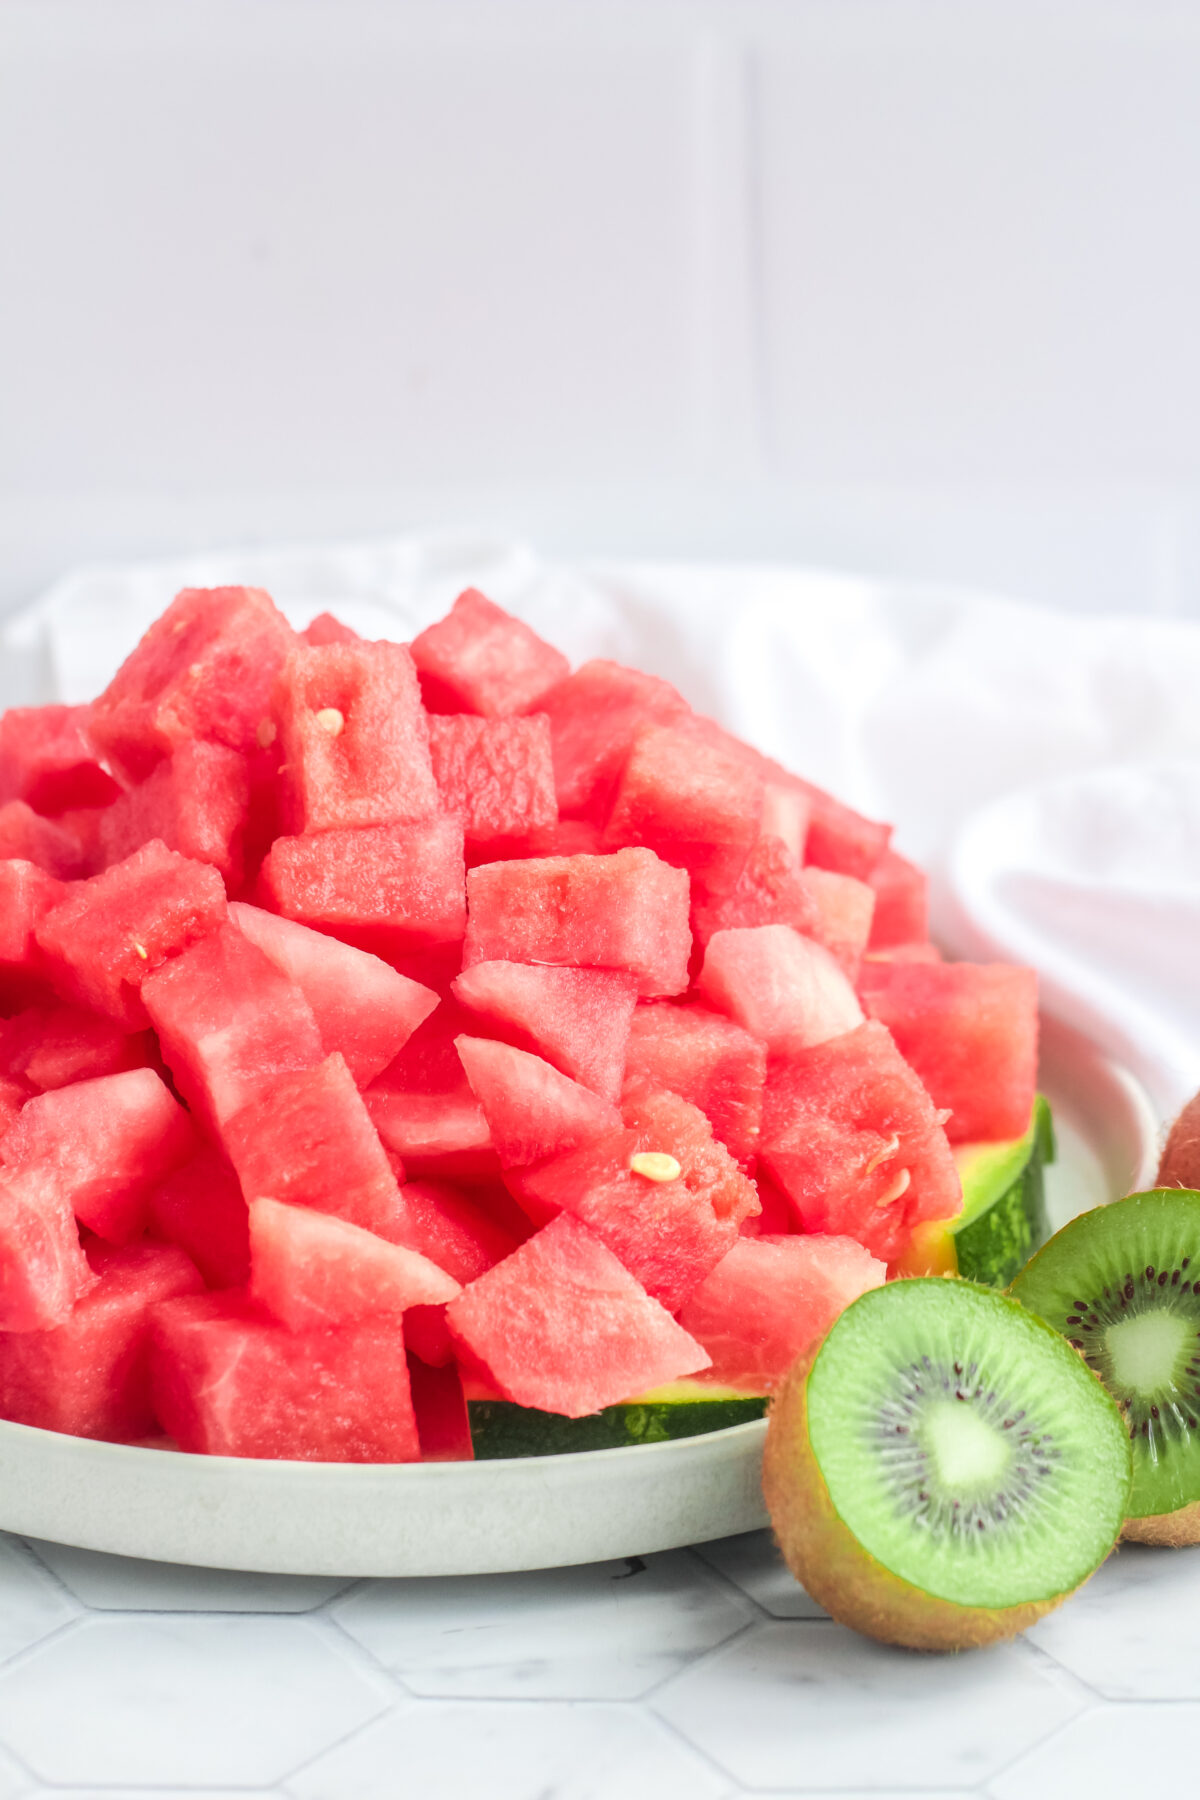 Ingredients for Watermelon Kiwi Ice Pops